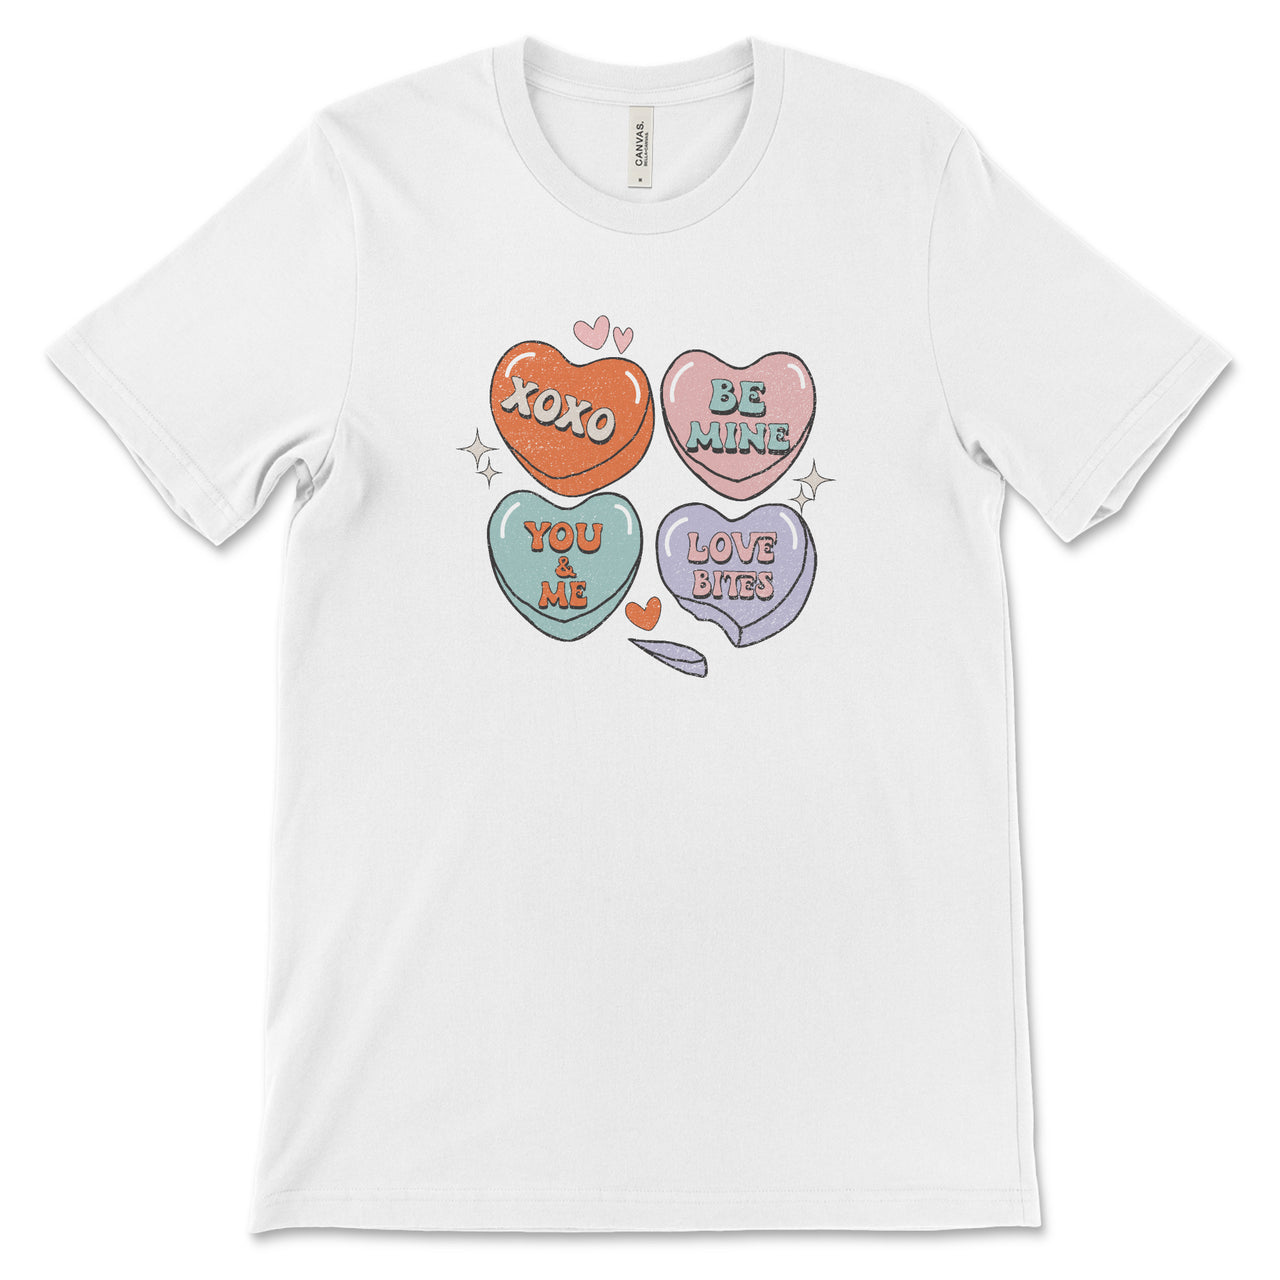 Love Bites T-Shirt - Valentine's Day Candy Hearts Shirt